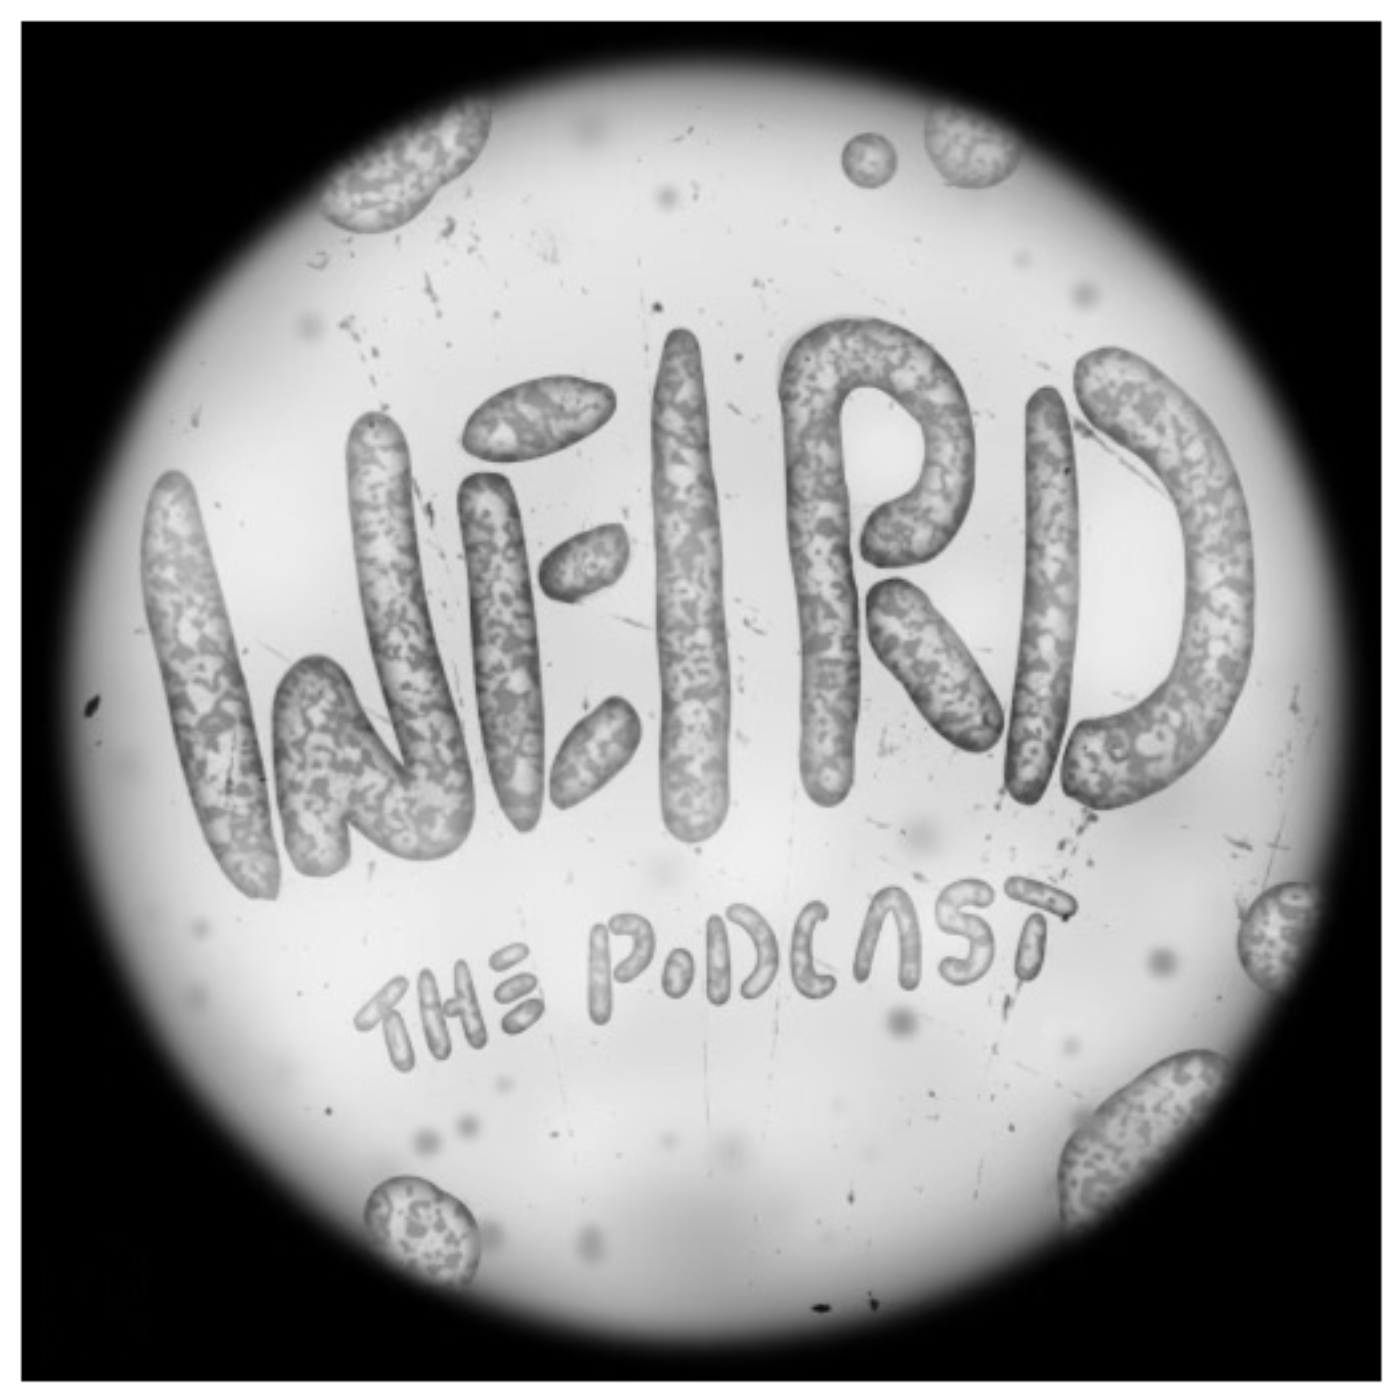 Weird: The Podcast